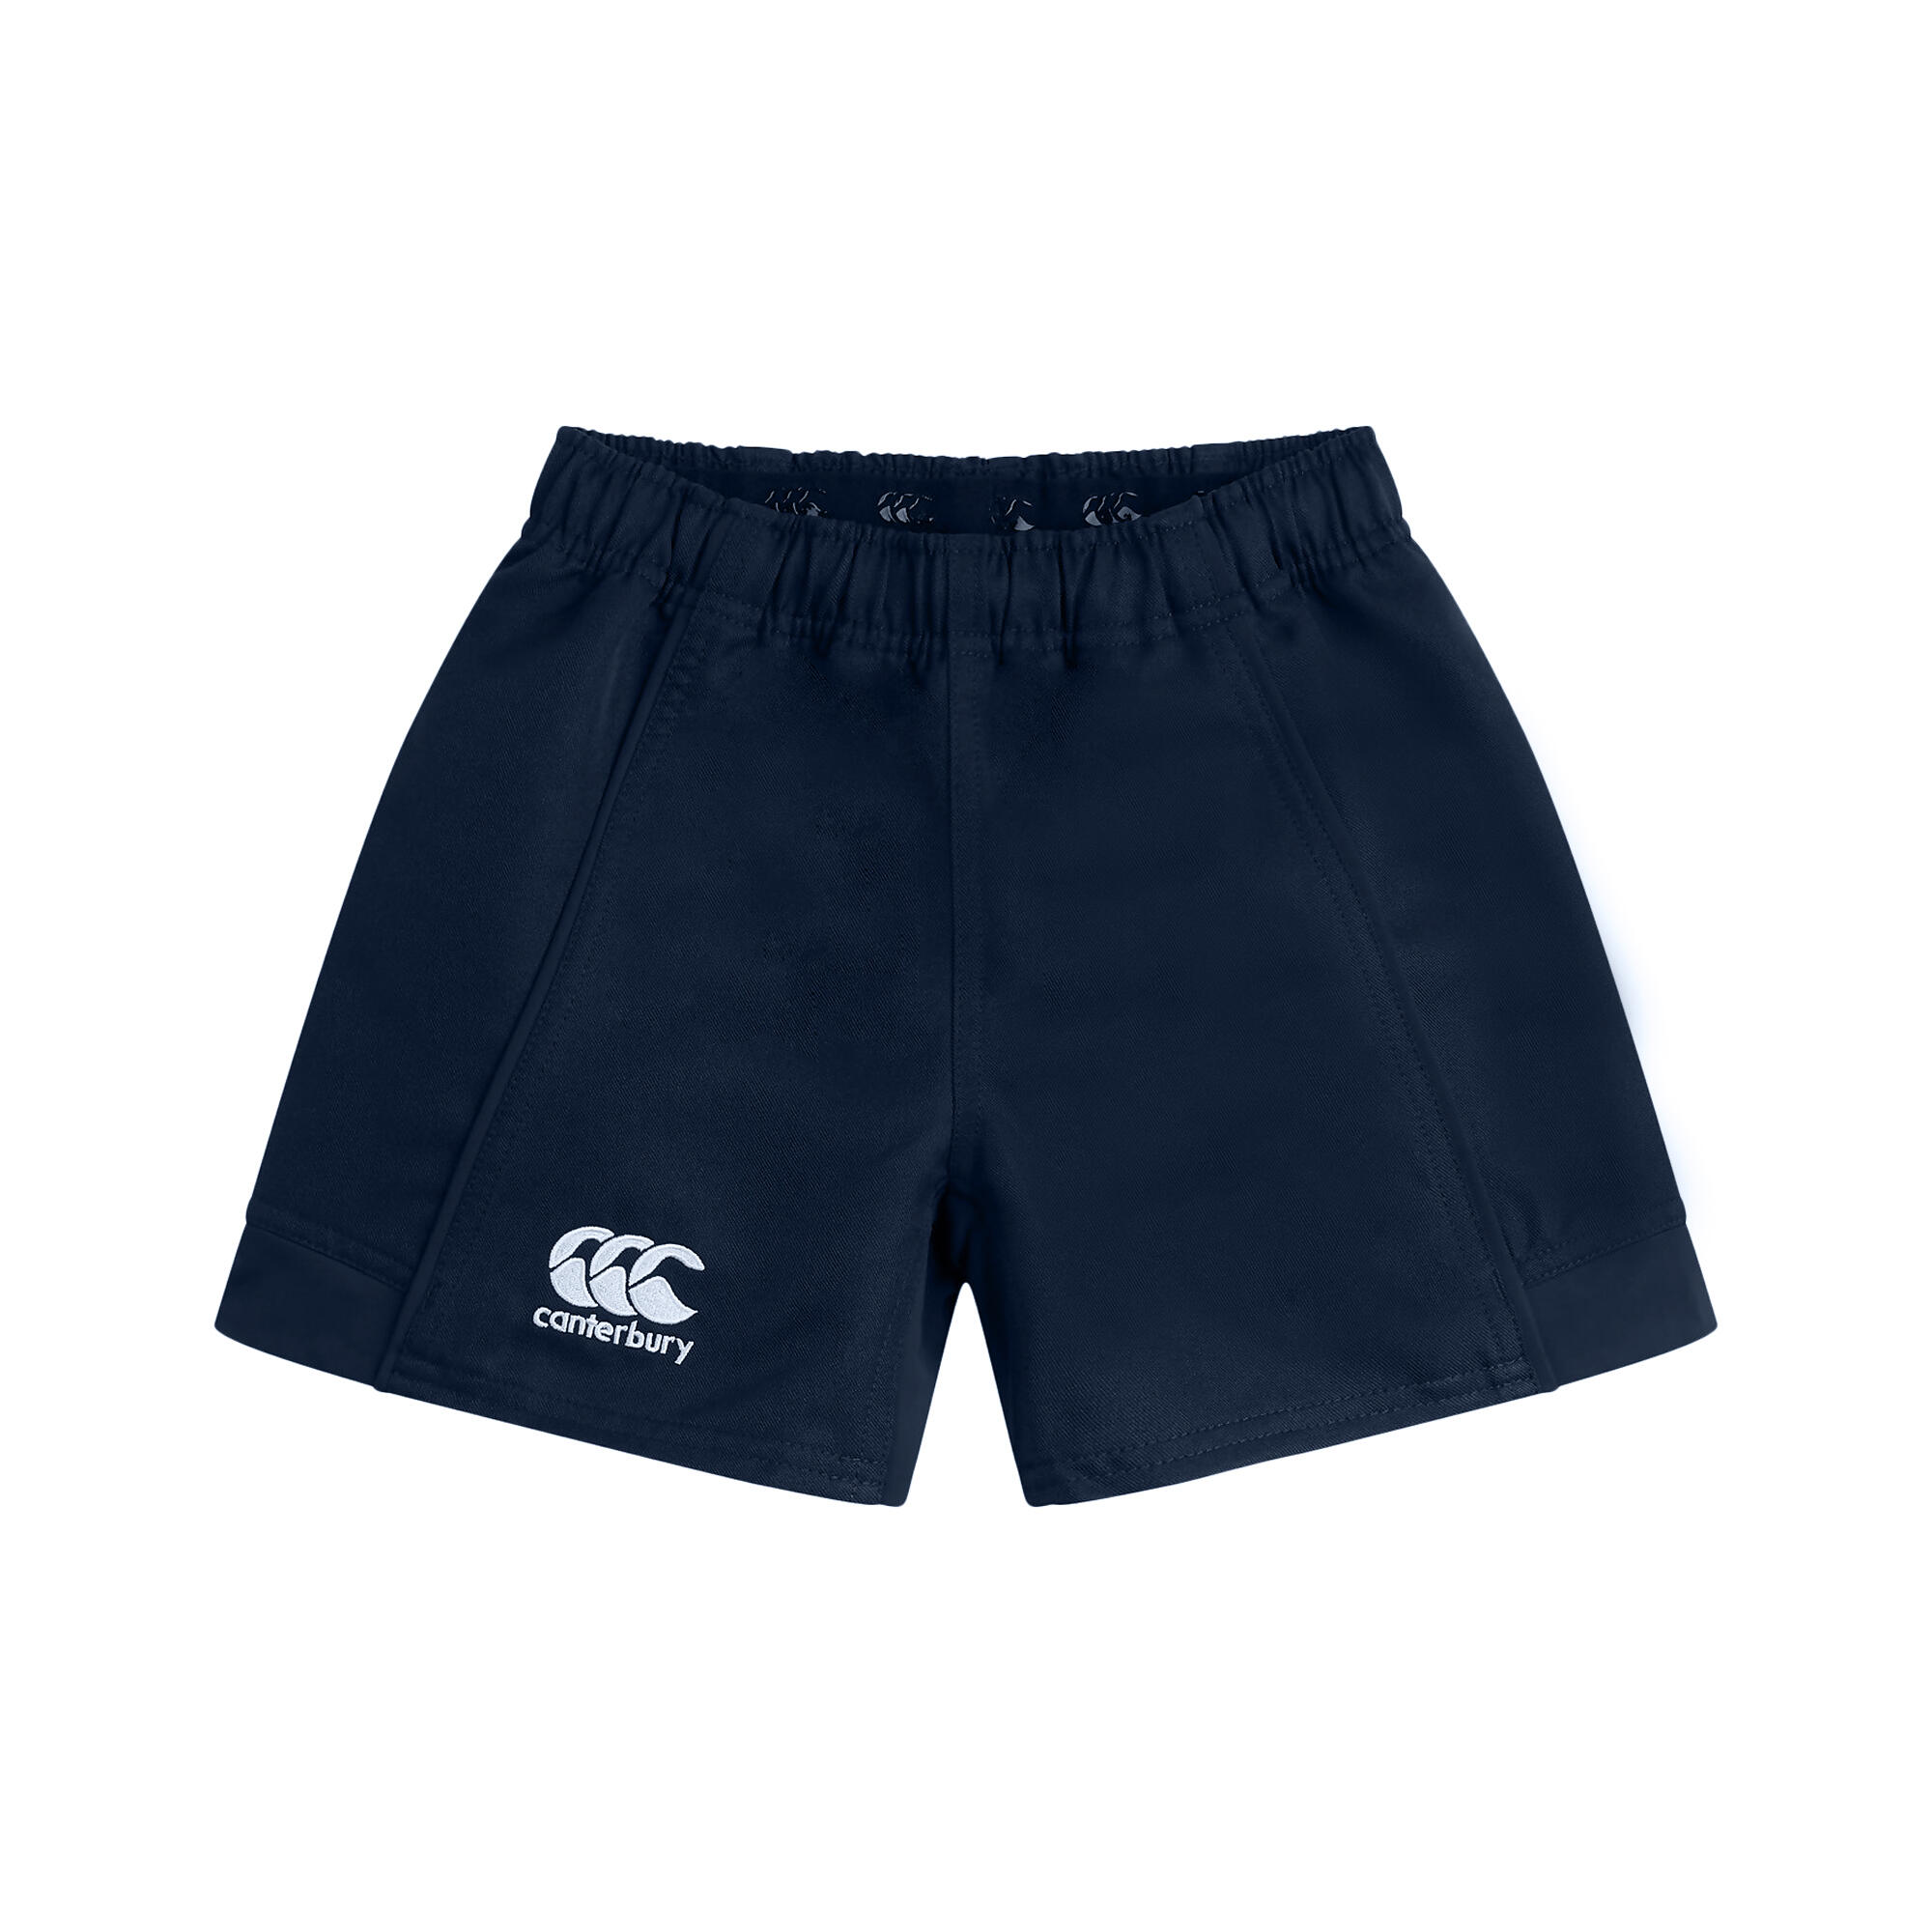 CANTERBURY Childrens/Kids Advantage Shorts (Navy)